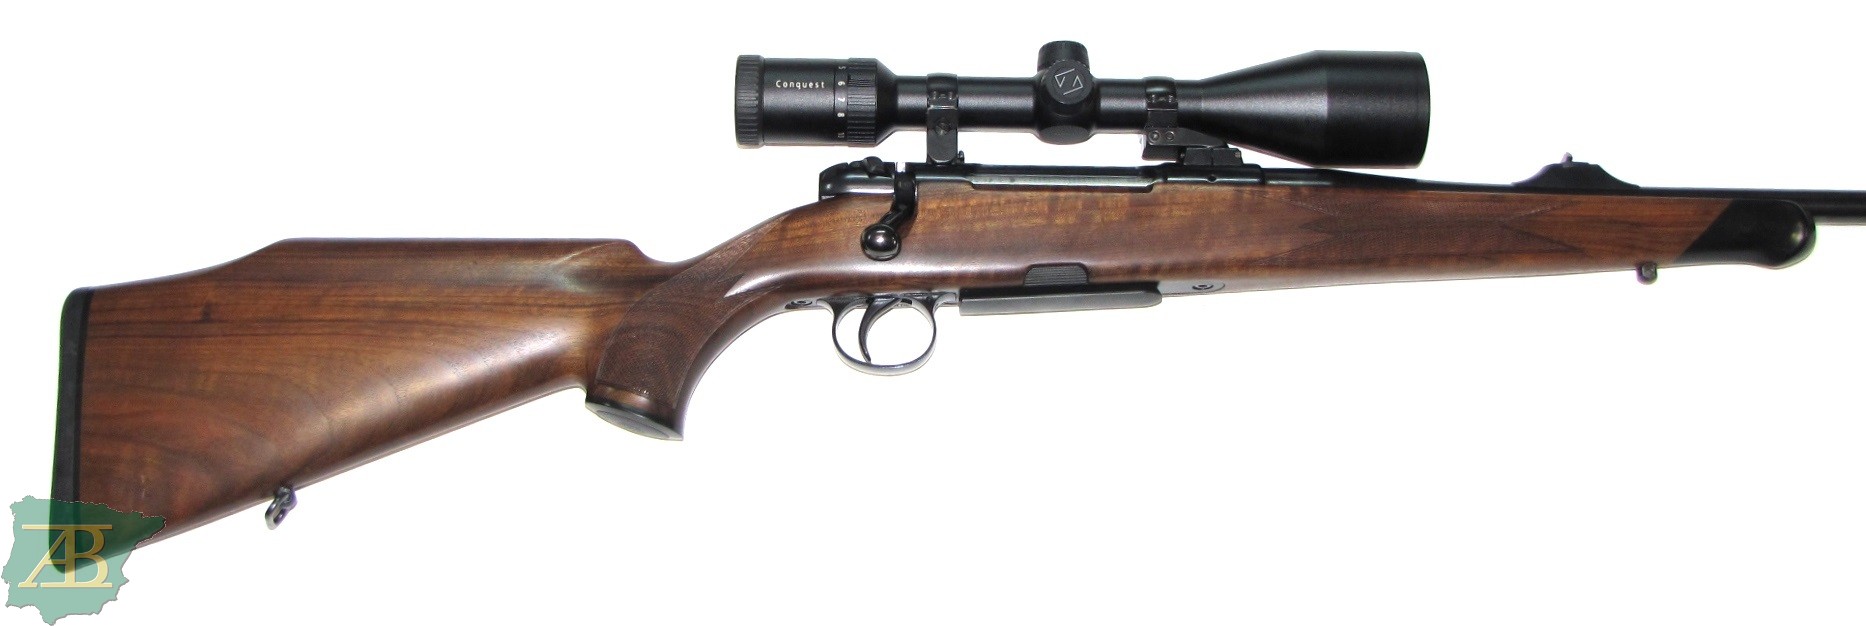 Rifle de cerrojo de caza HEYM SR21 Ref 7085-armeriaiberica-2